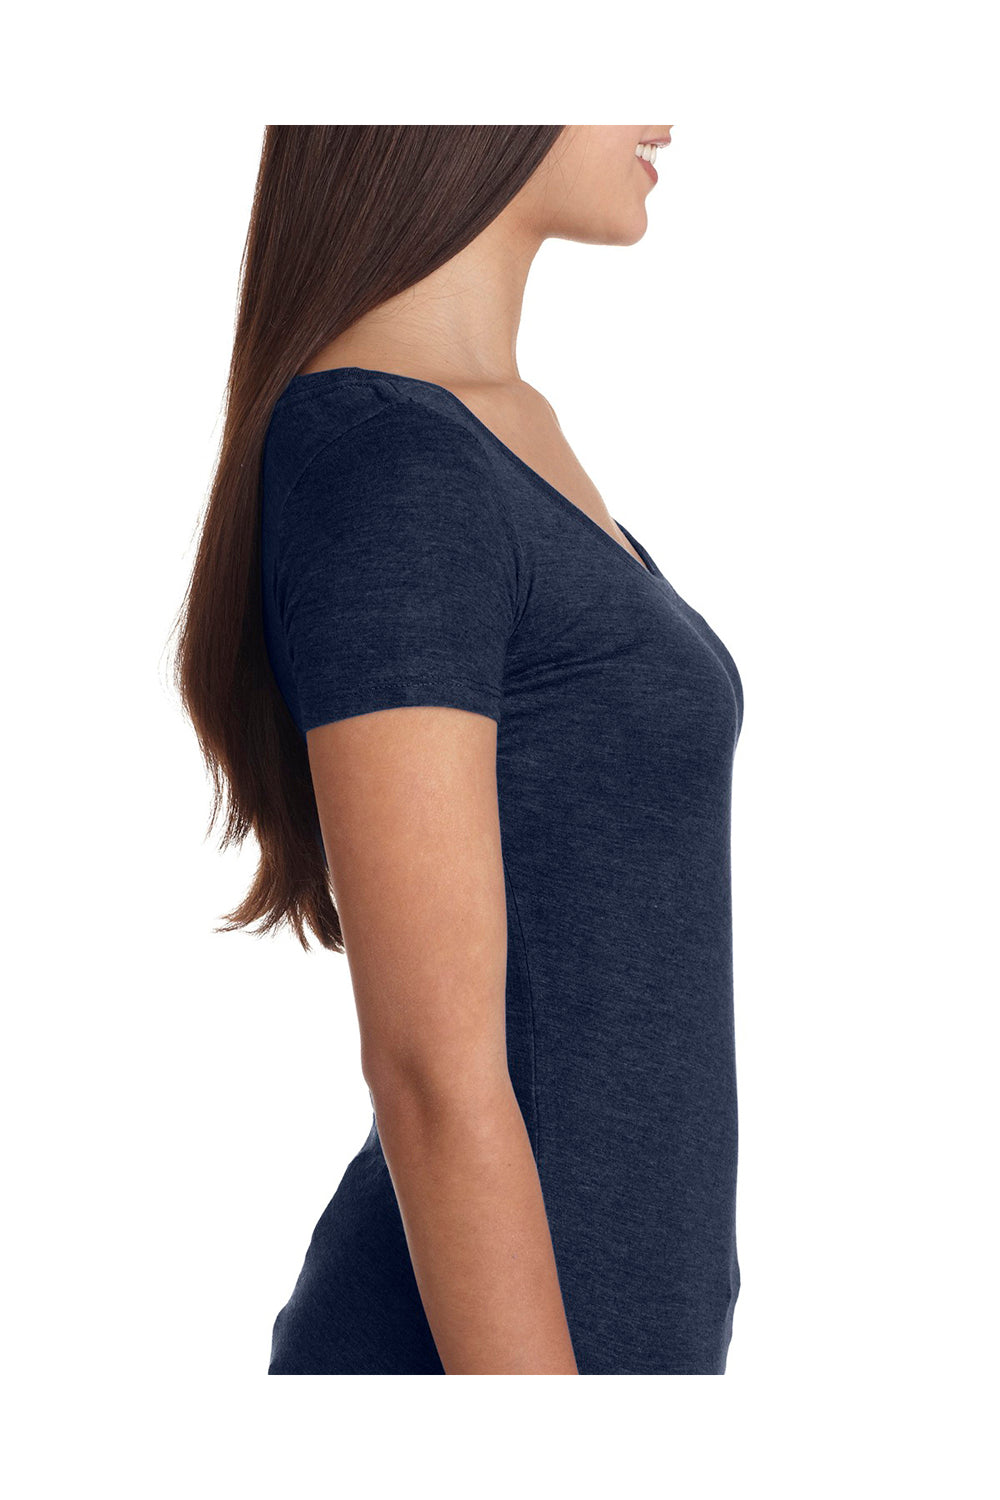 Next Level 6730 Womens Jersey Short Sleeve Scoop Neck T-Shirt Navy Blue Side